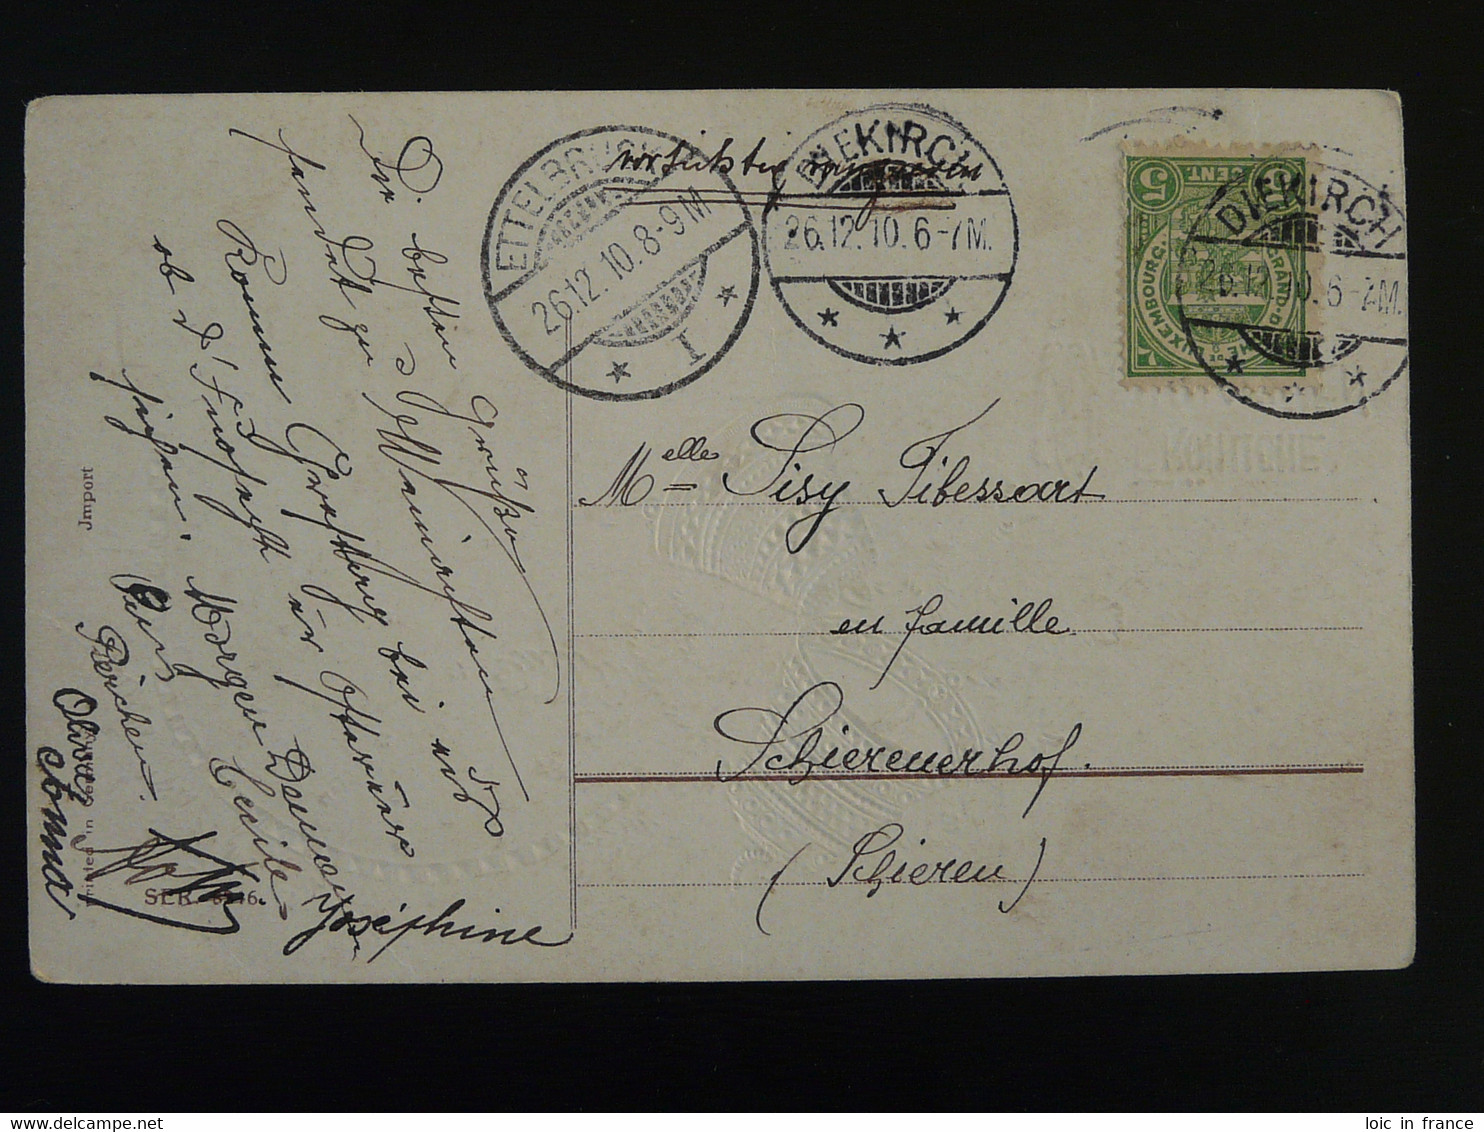 Oblit. Diekirch + Ettelbruck Sur Carte Postale Luxembourg 1910 - Franking Machines (EMA)